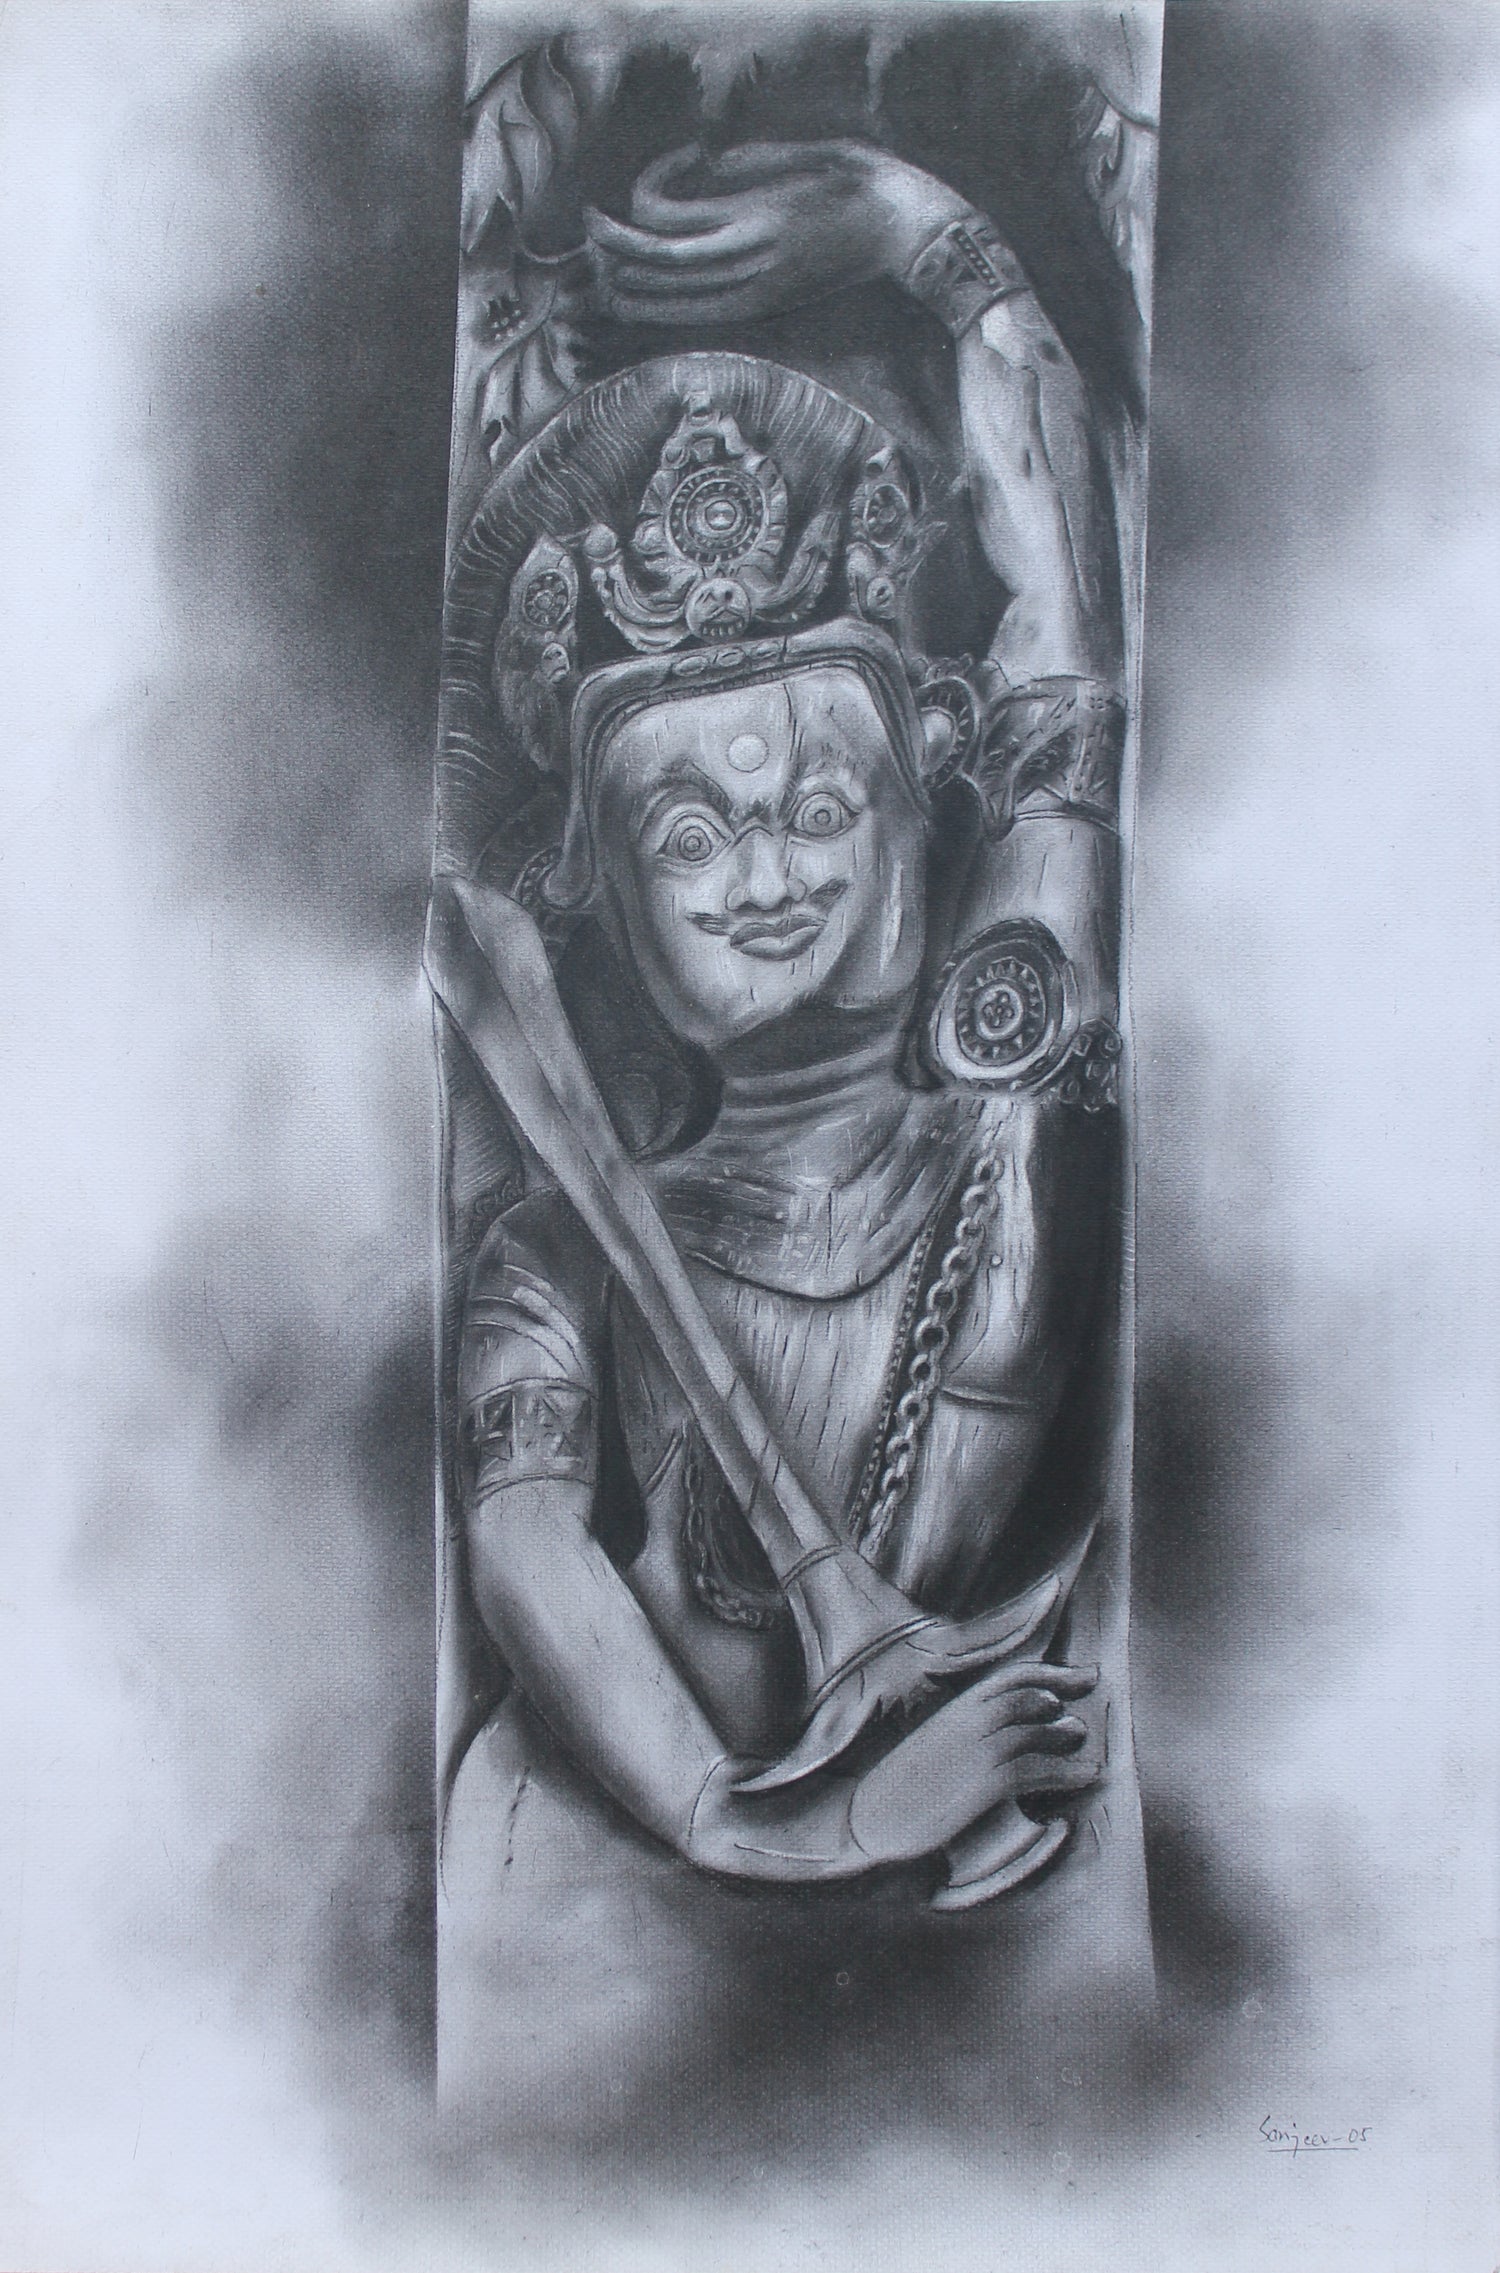 Hindu Deity, God of Nepal carrying sword